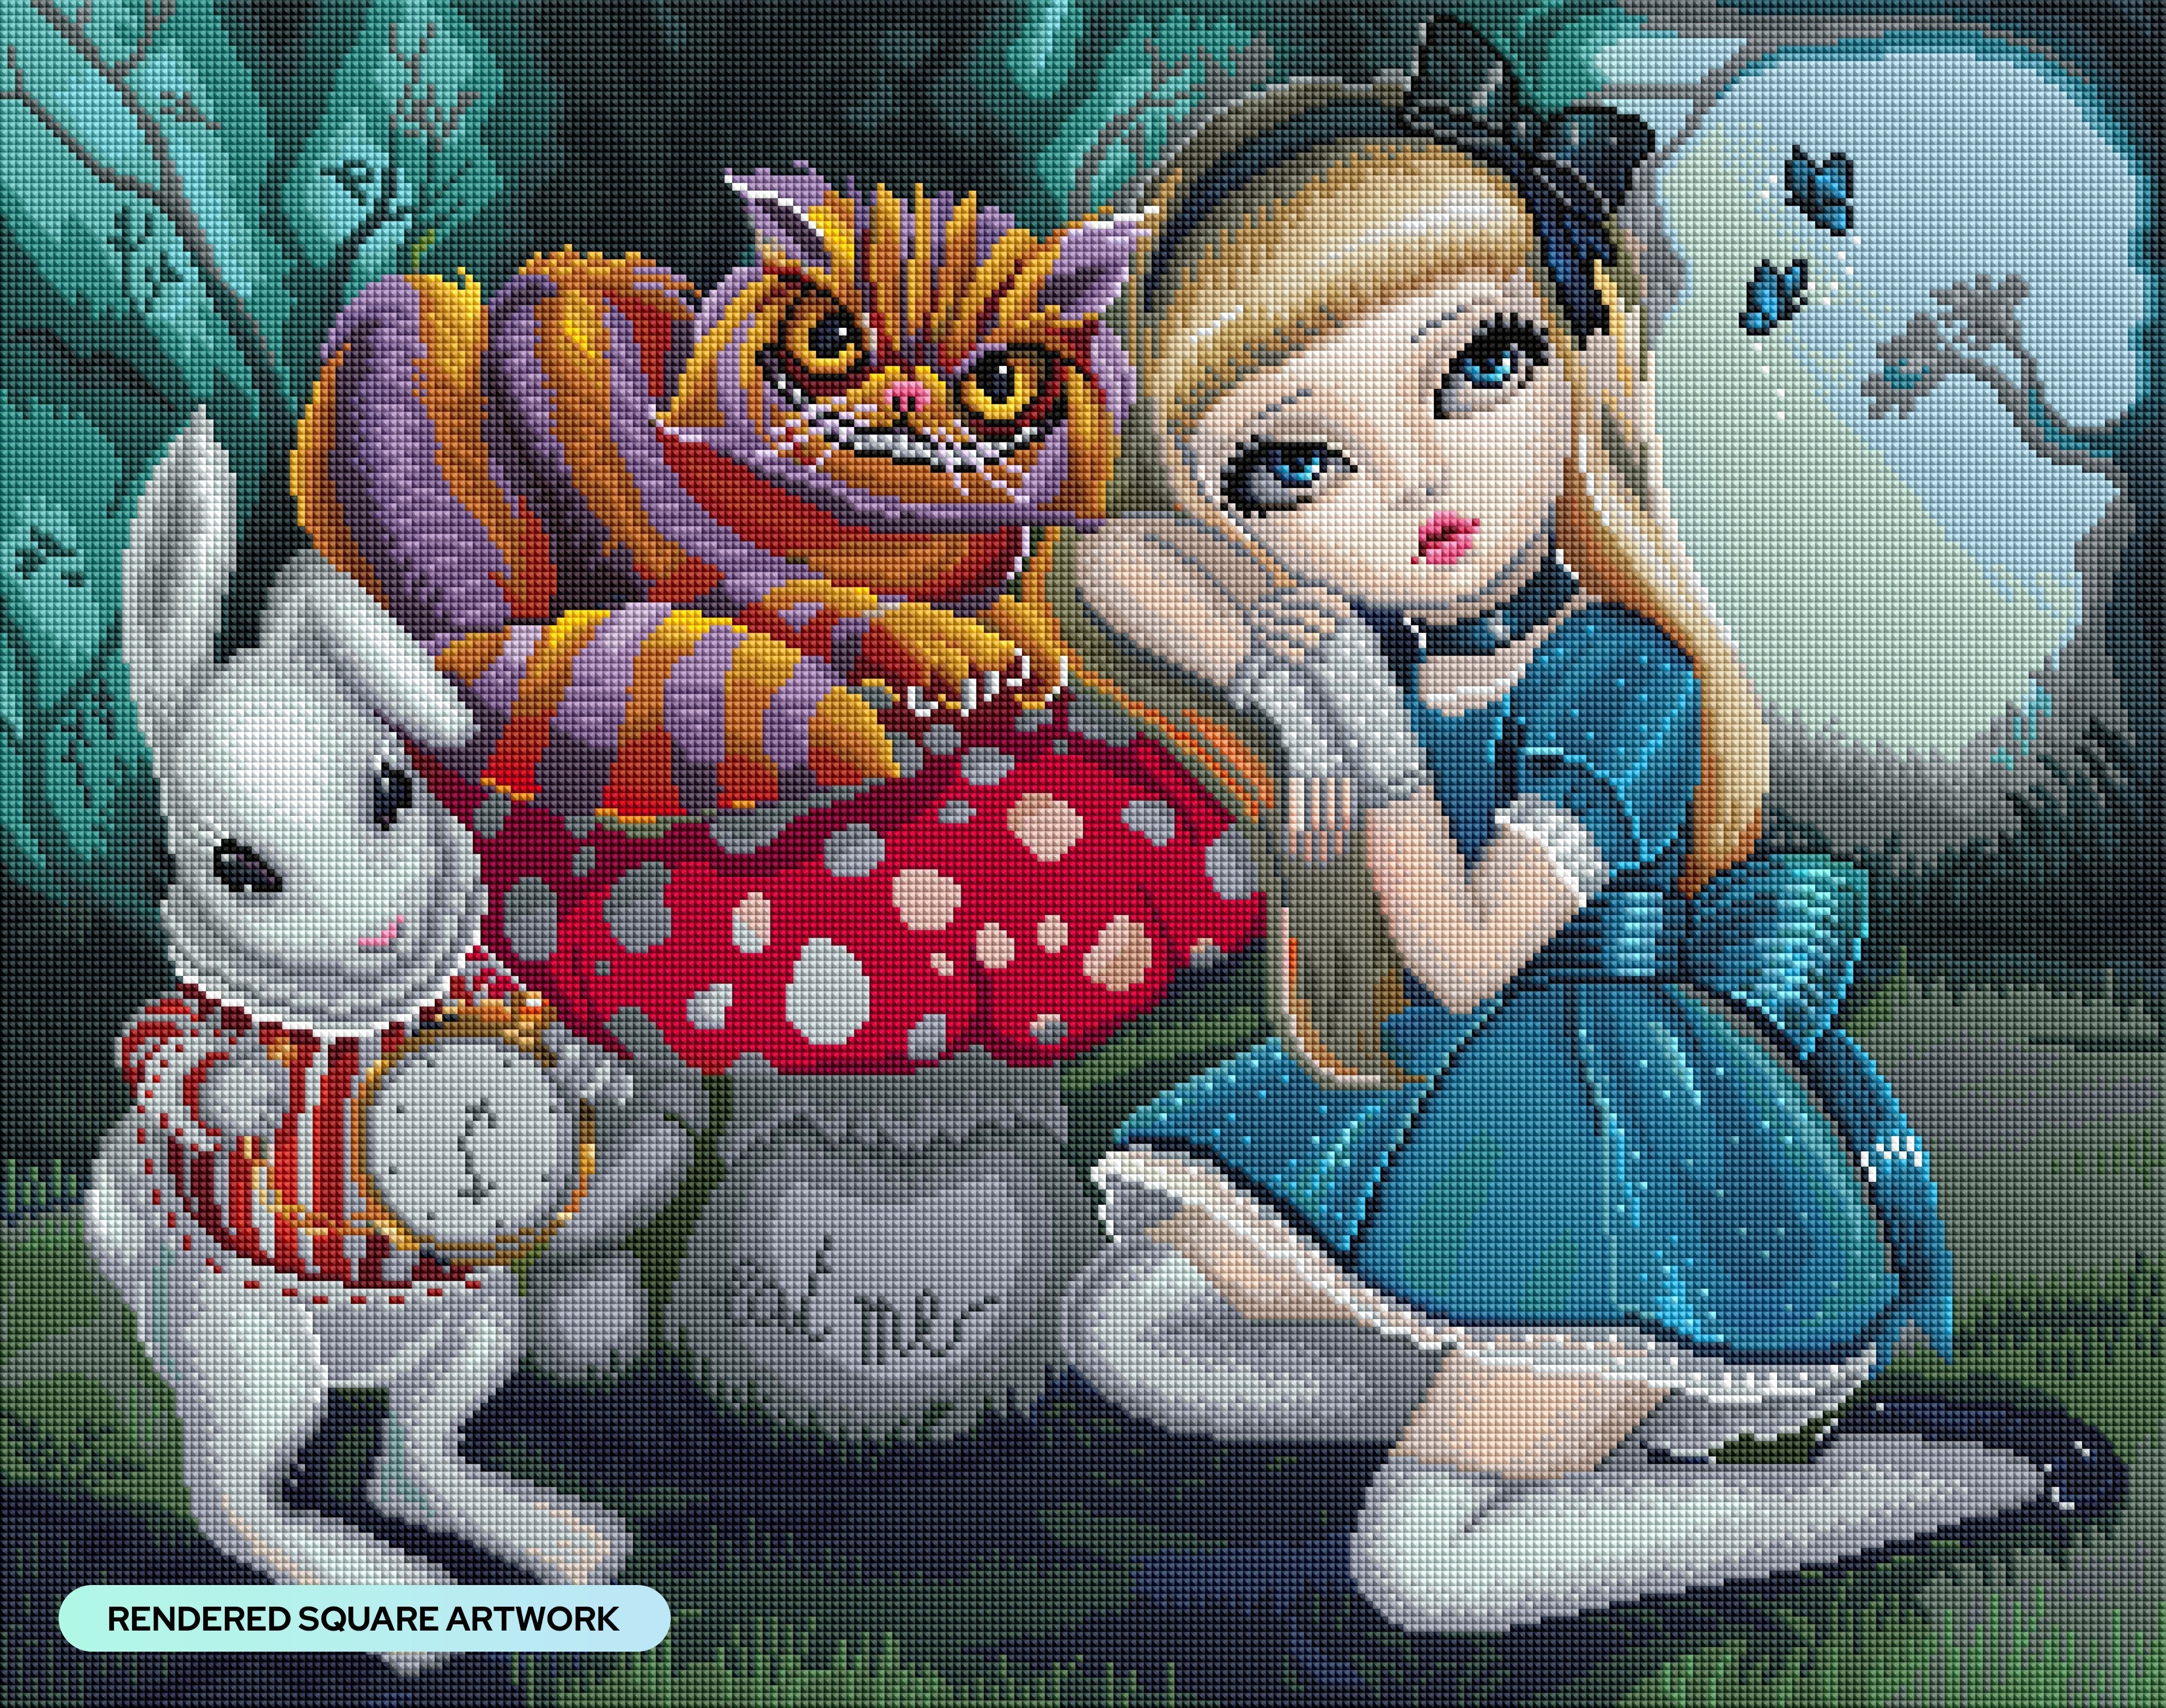 5D Diamond Painting Alice in Wonderland Flowers Kit